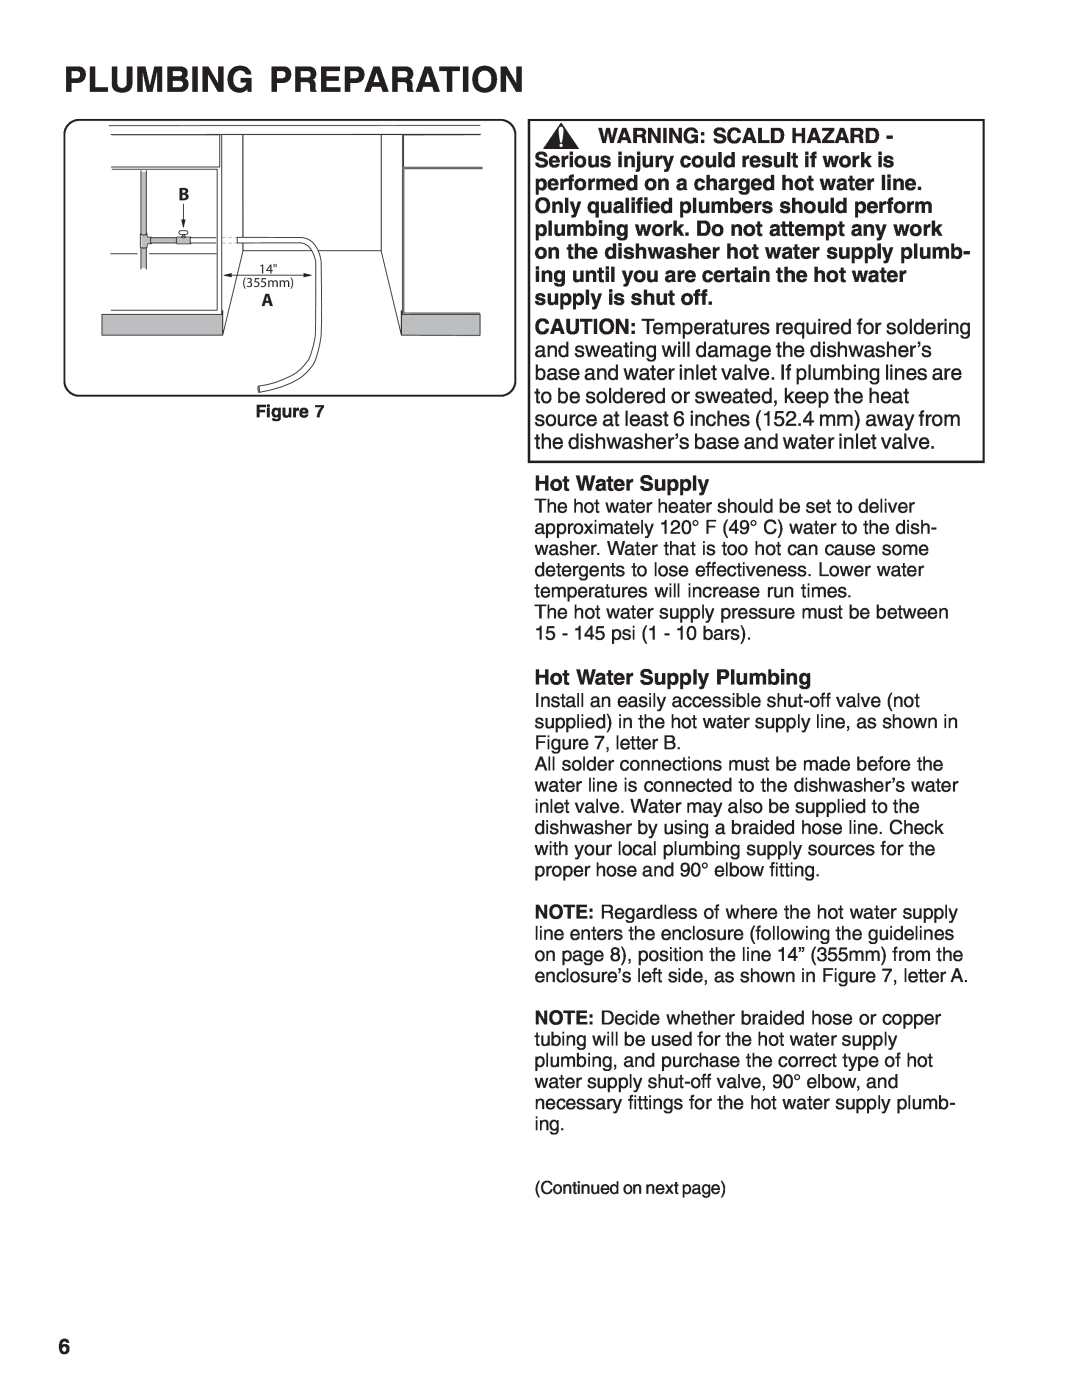 Thermador 9000039271 installation instructions Plumbing Preparation, Hot Water Supply Plumbing 